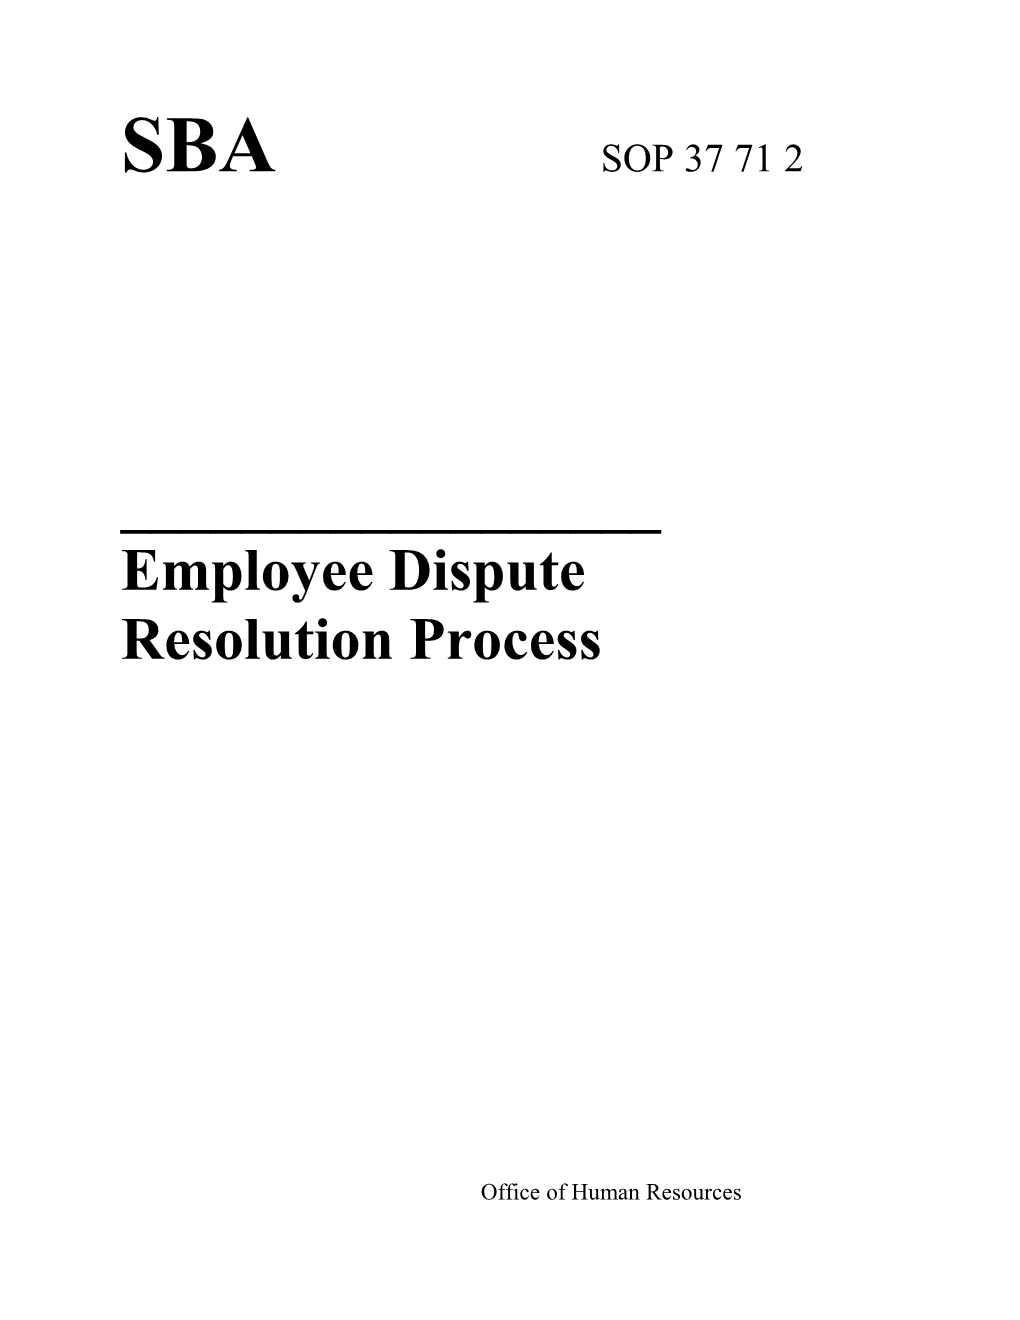 SBA SOP 37 71 2: Employee Dispute Resolution Process